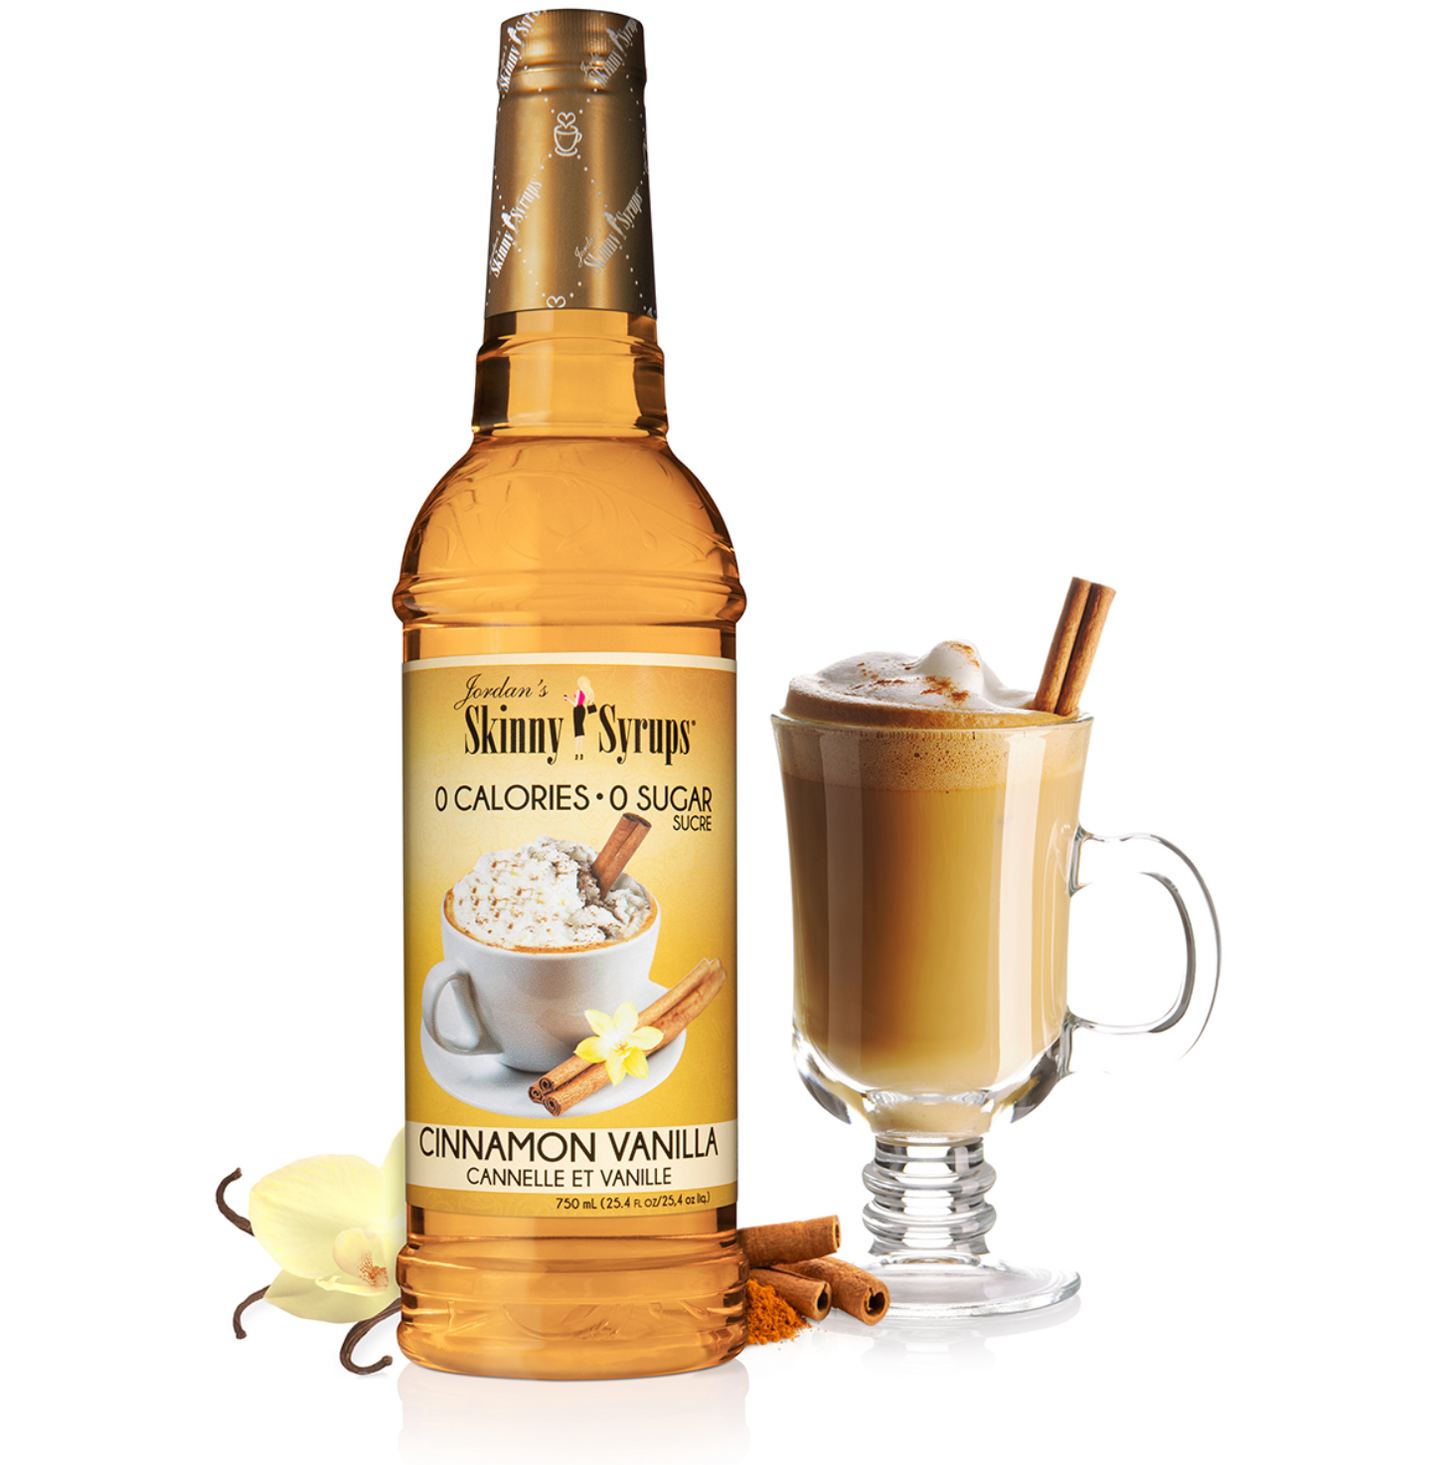 Skinny Cinnamon Vanilla Syrup